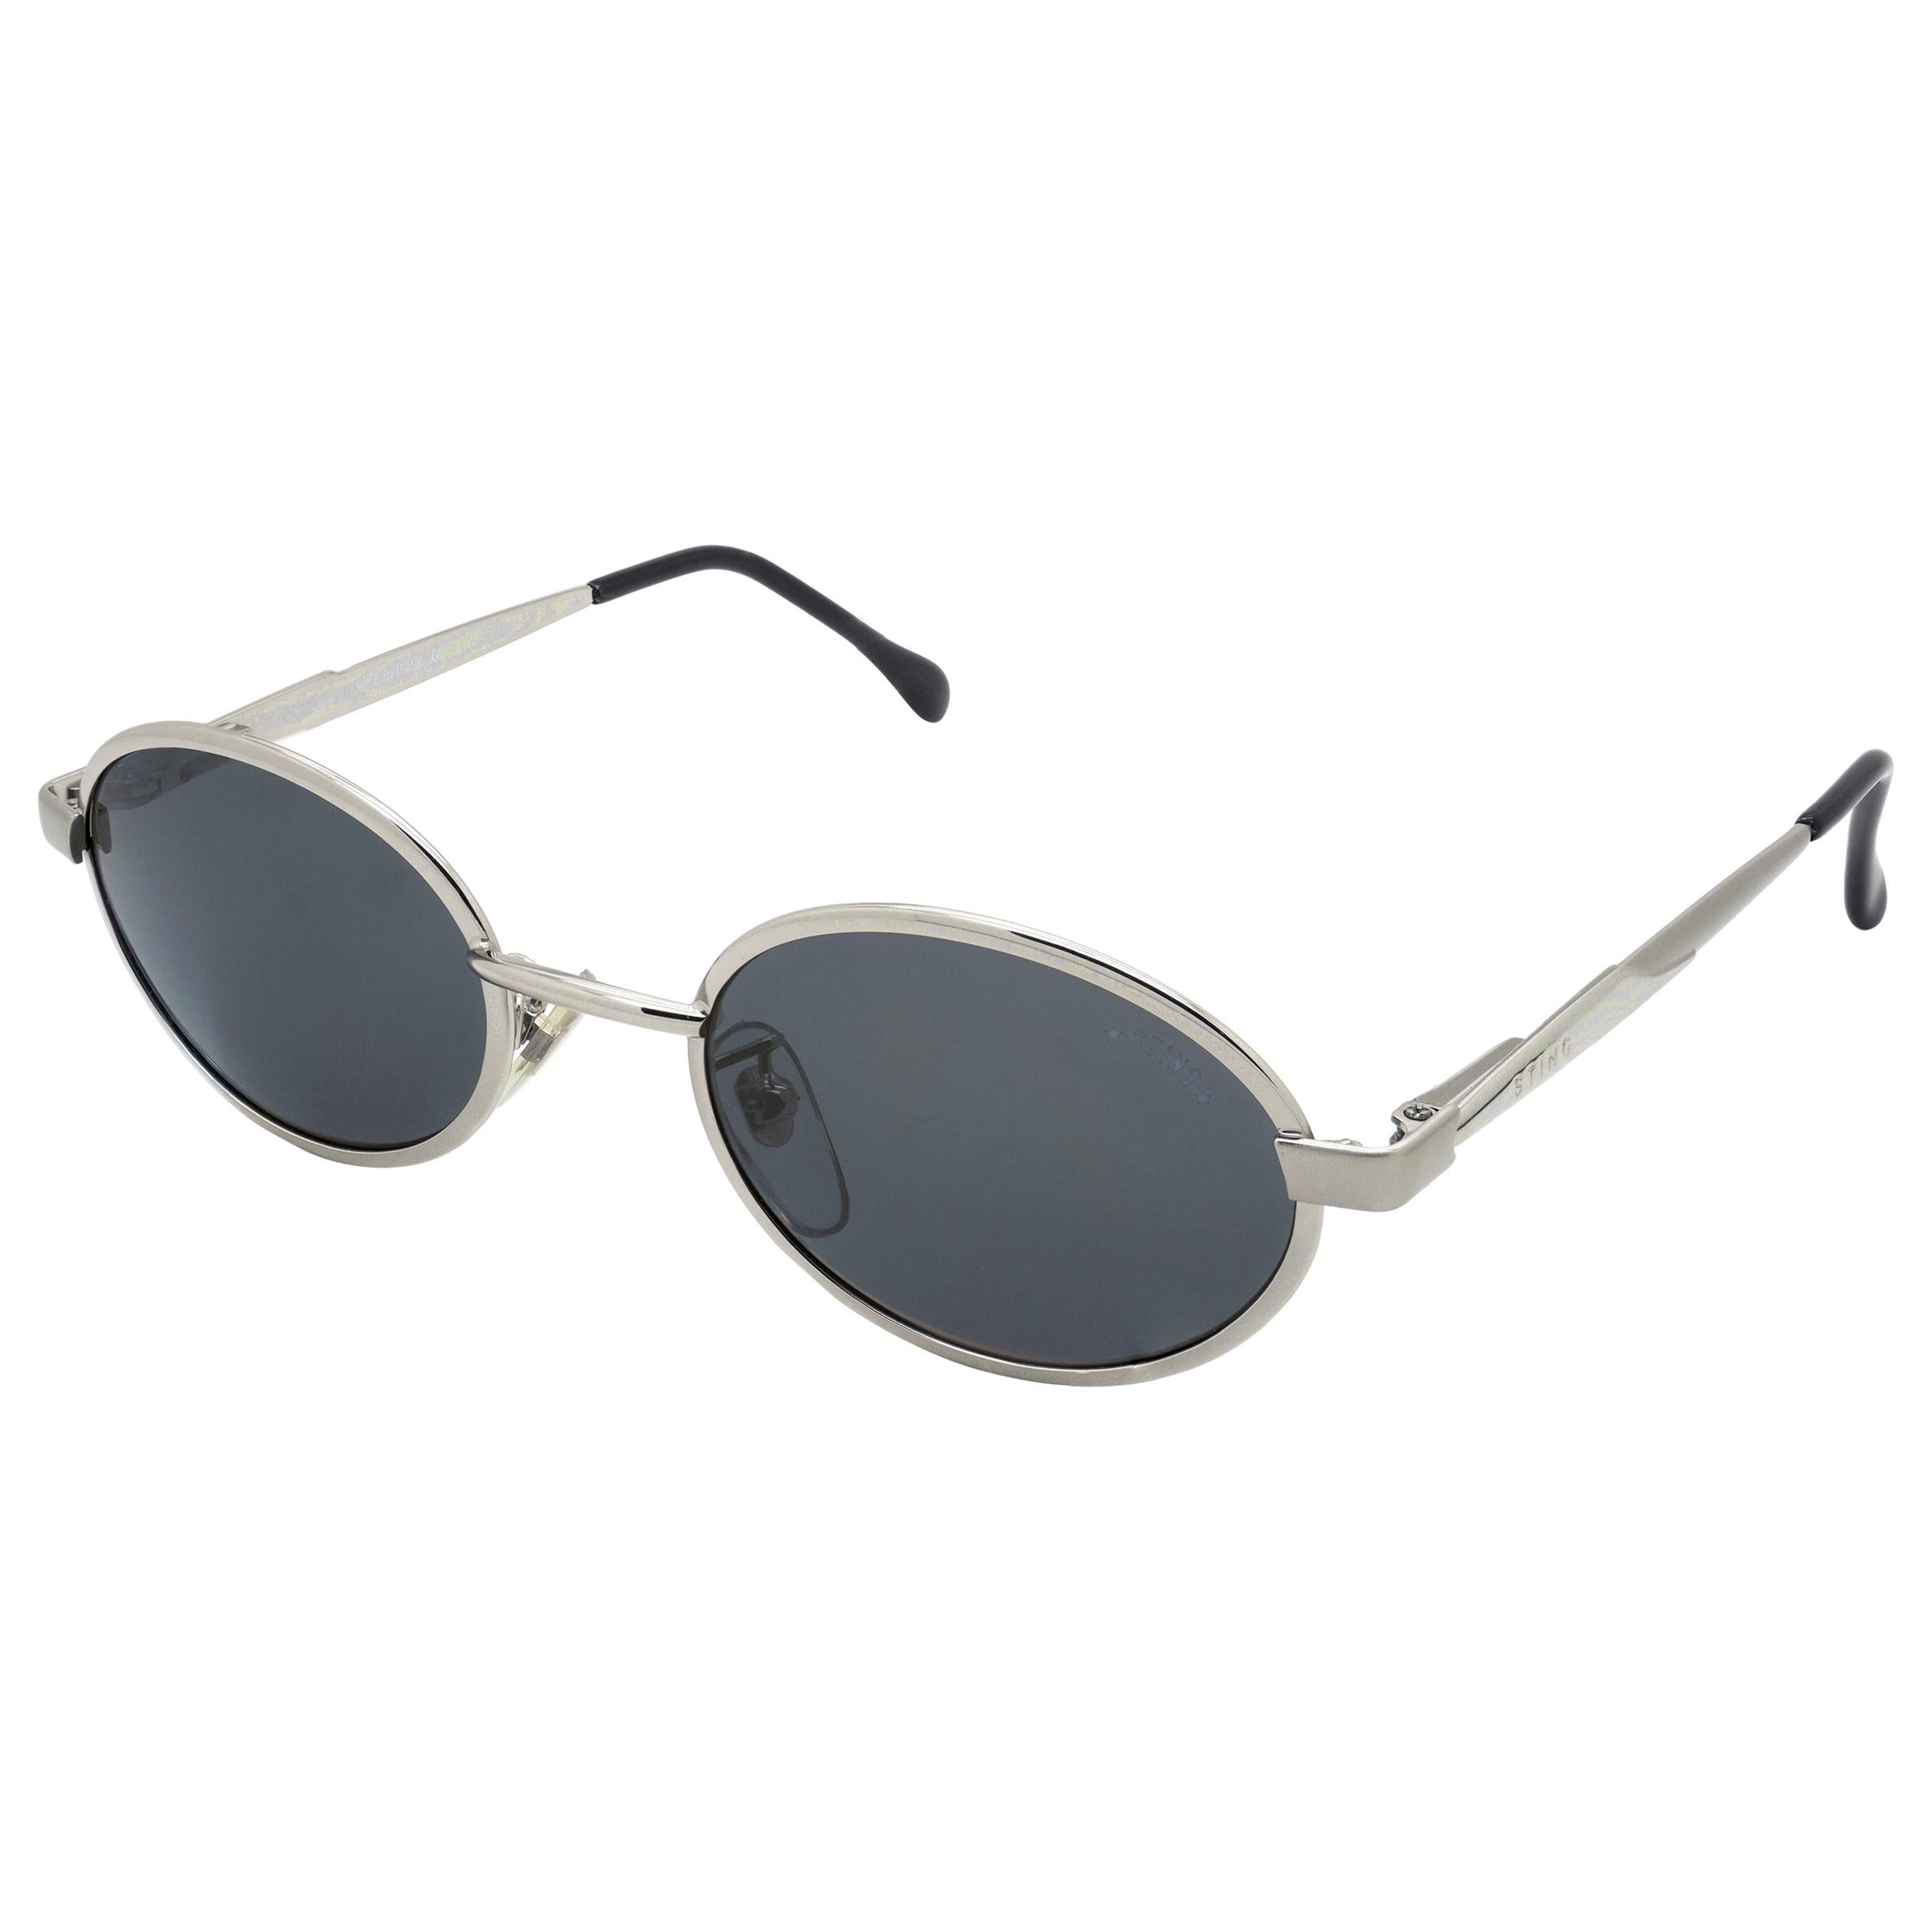 Sting round vintage sunglasses spring hinges For Sale